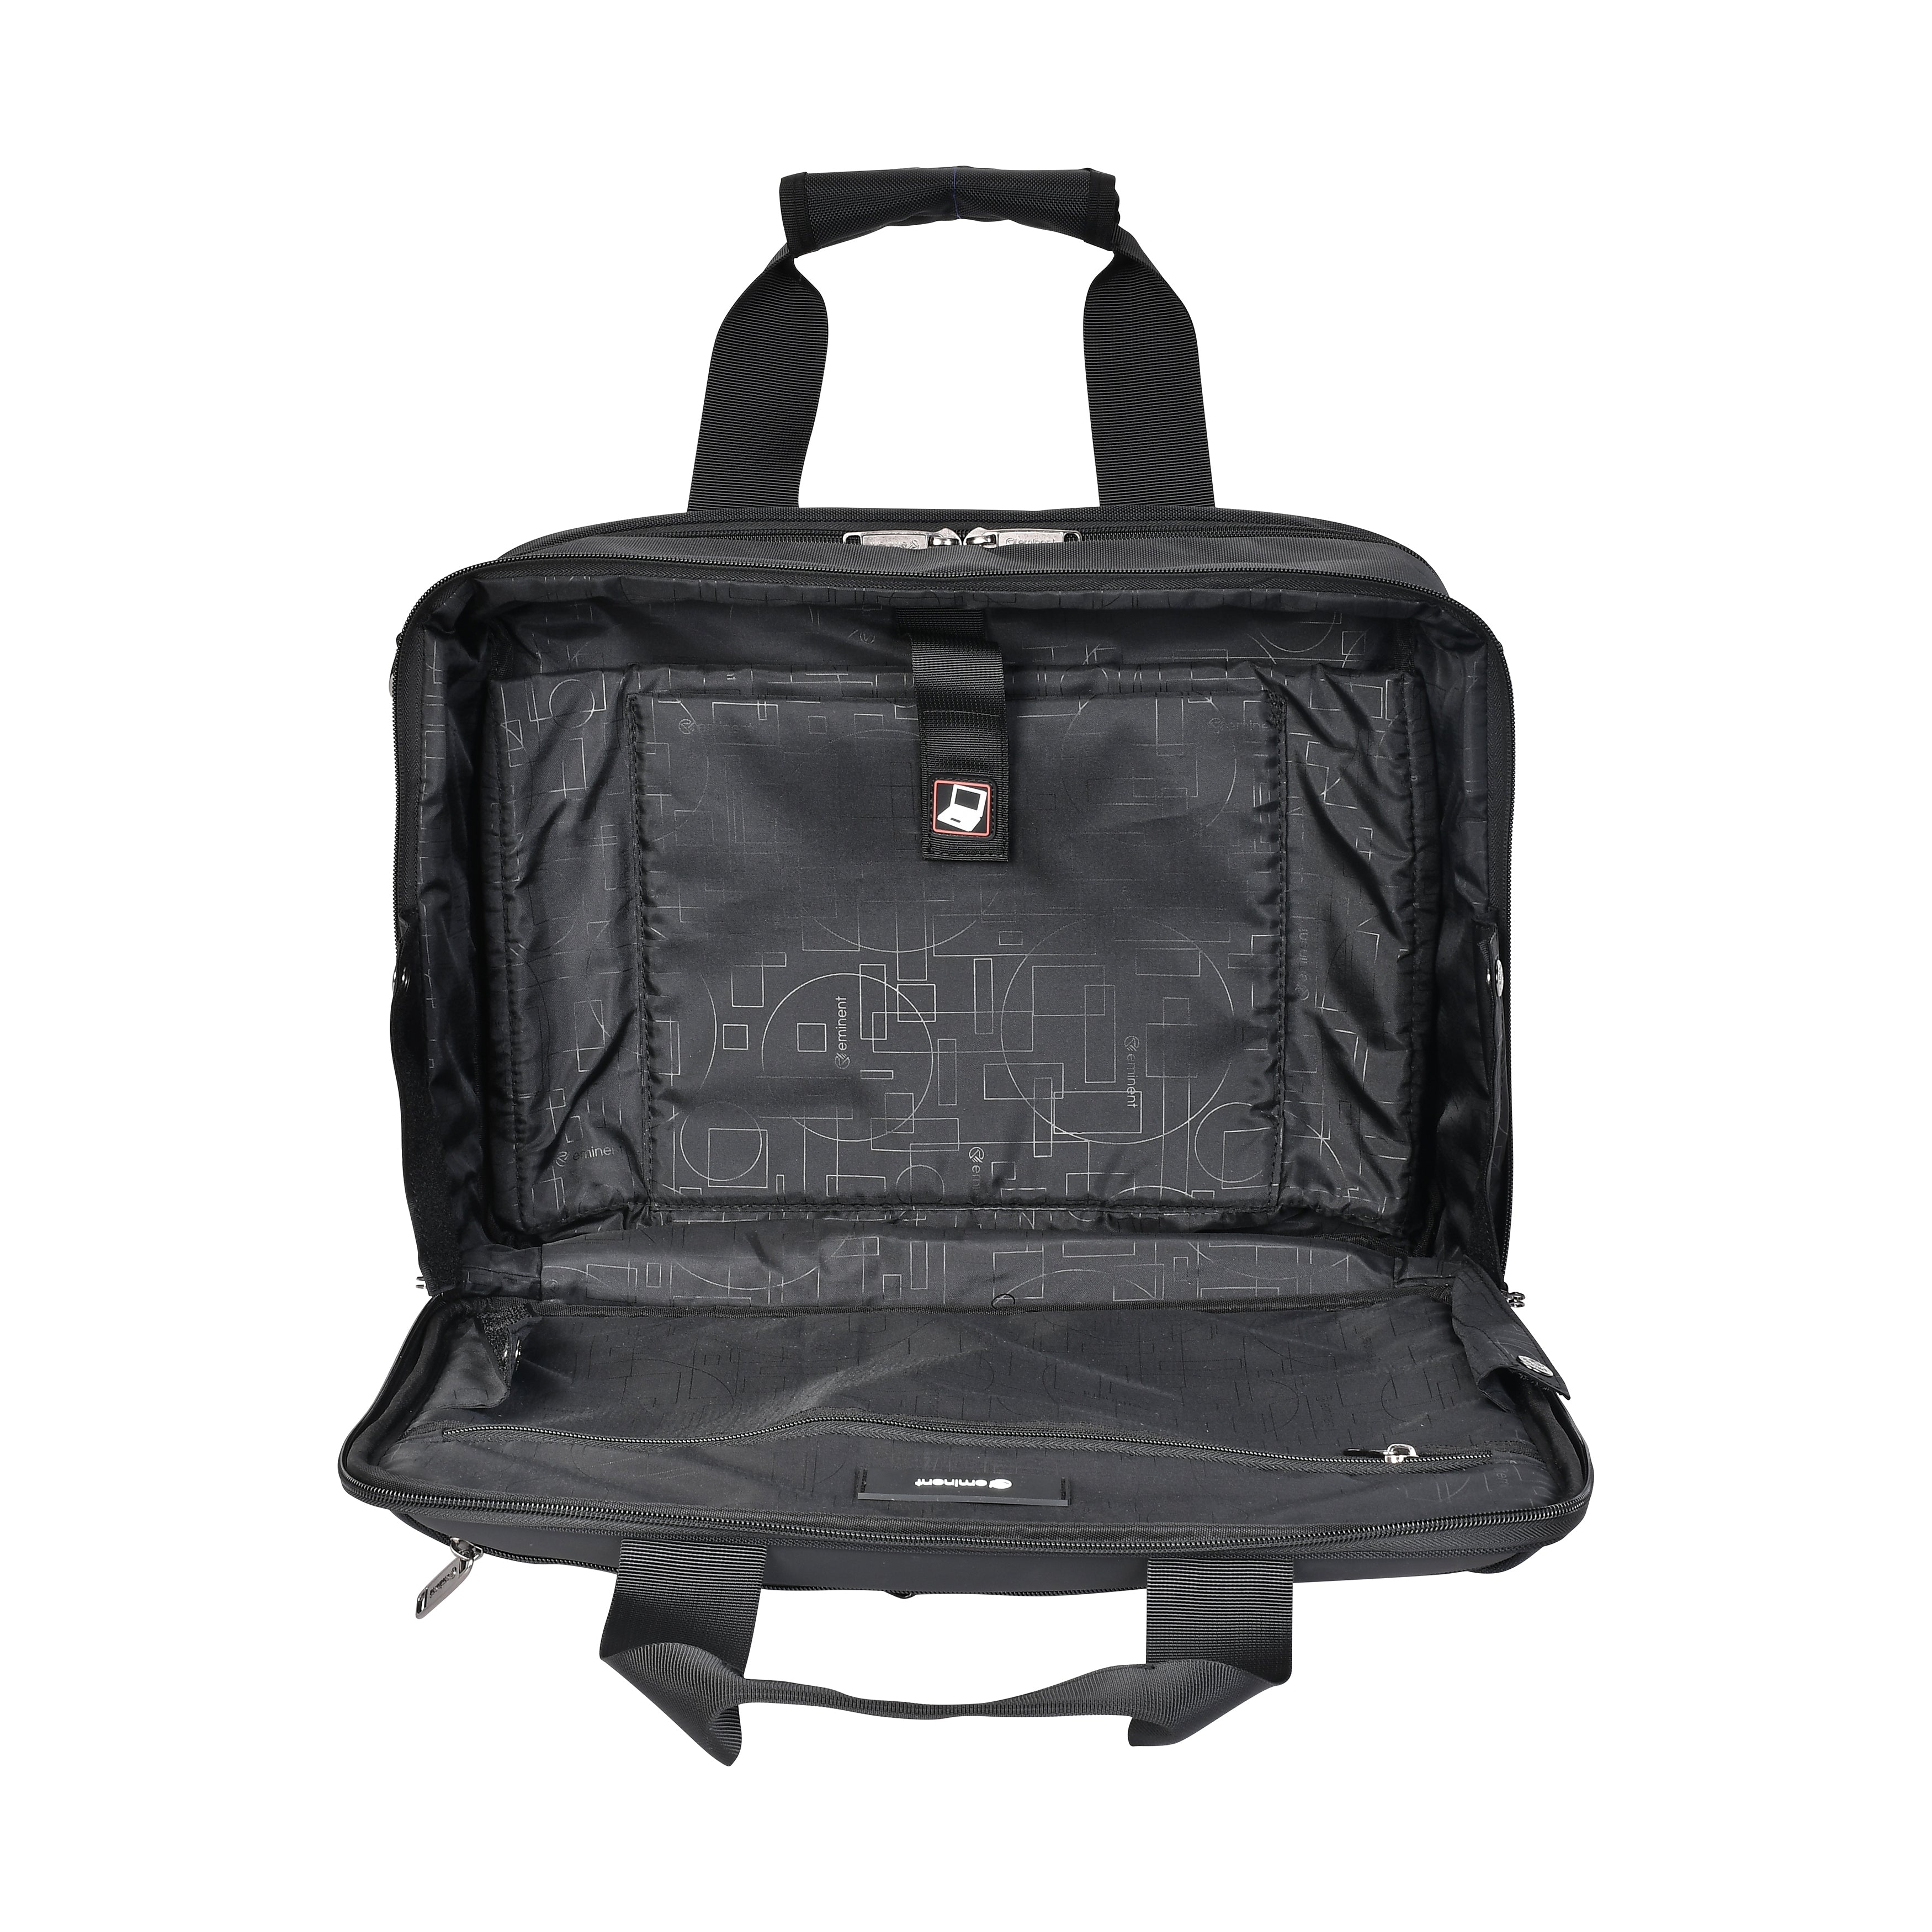 Eminent Premium 17inch Shoulder Laptop Bag Polyester Light Weight 180° Opening Business Laptop Case for Men Women on Travel Business, V368B-17